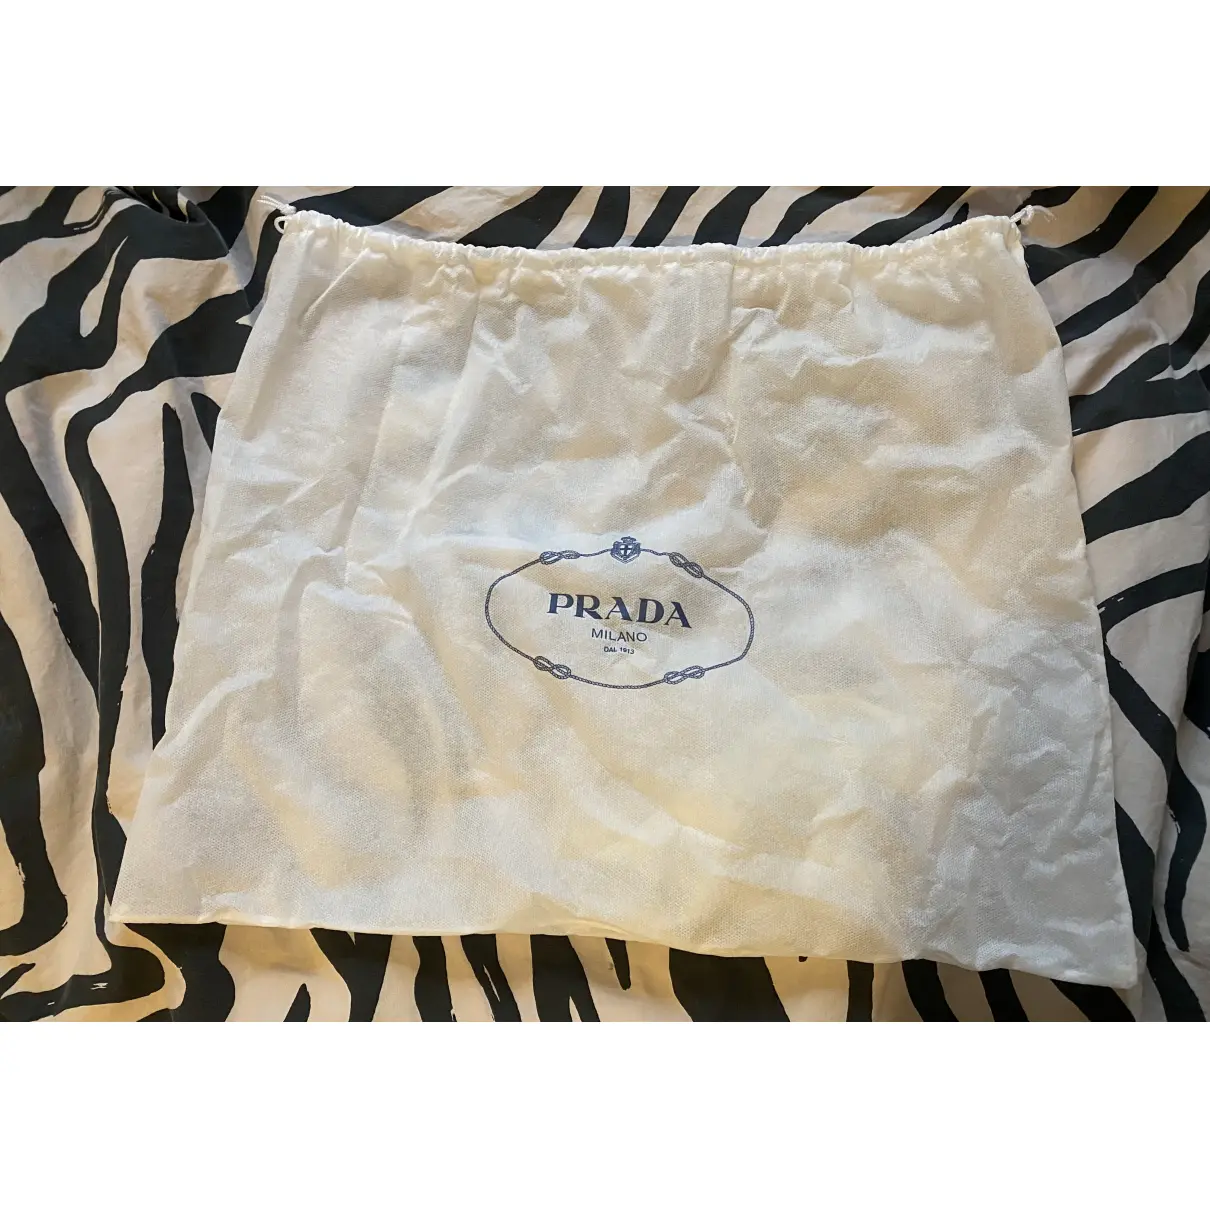 Leather handbag Prada